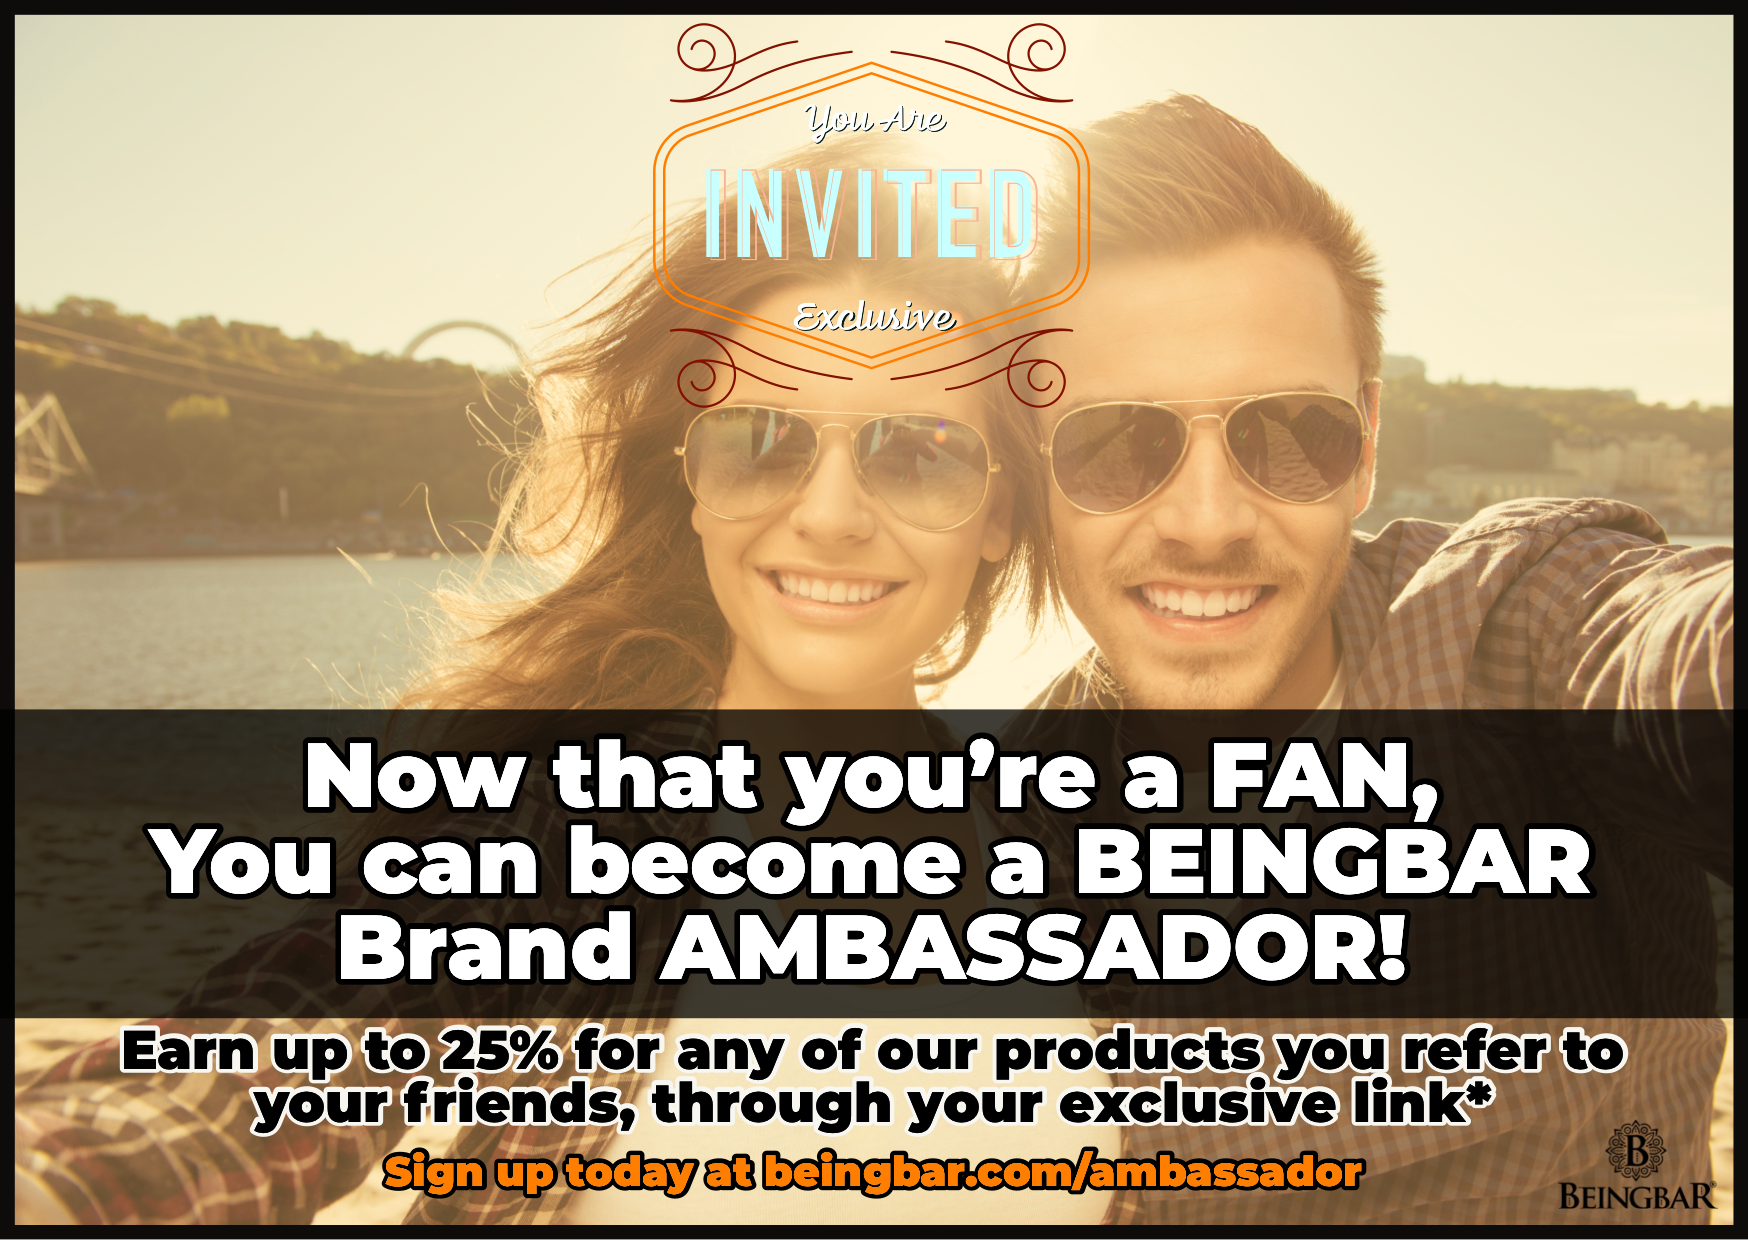 Become a BEINGBAR Ambassador - Join the Ambassador program